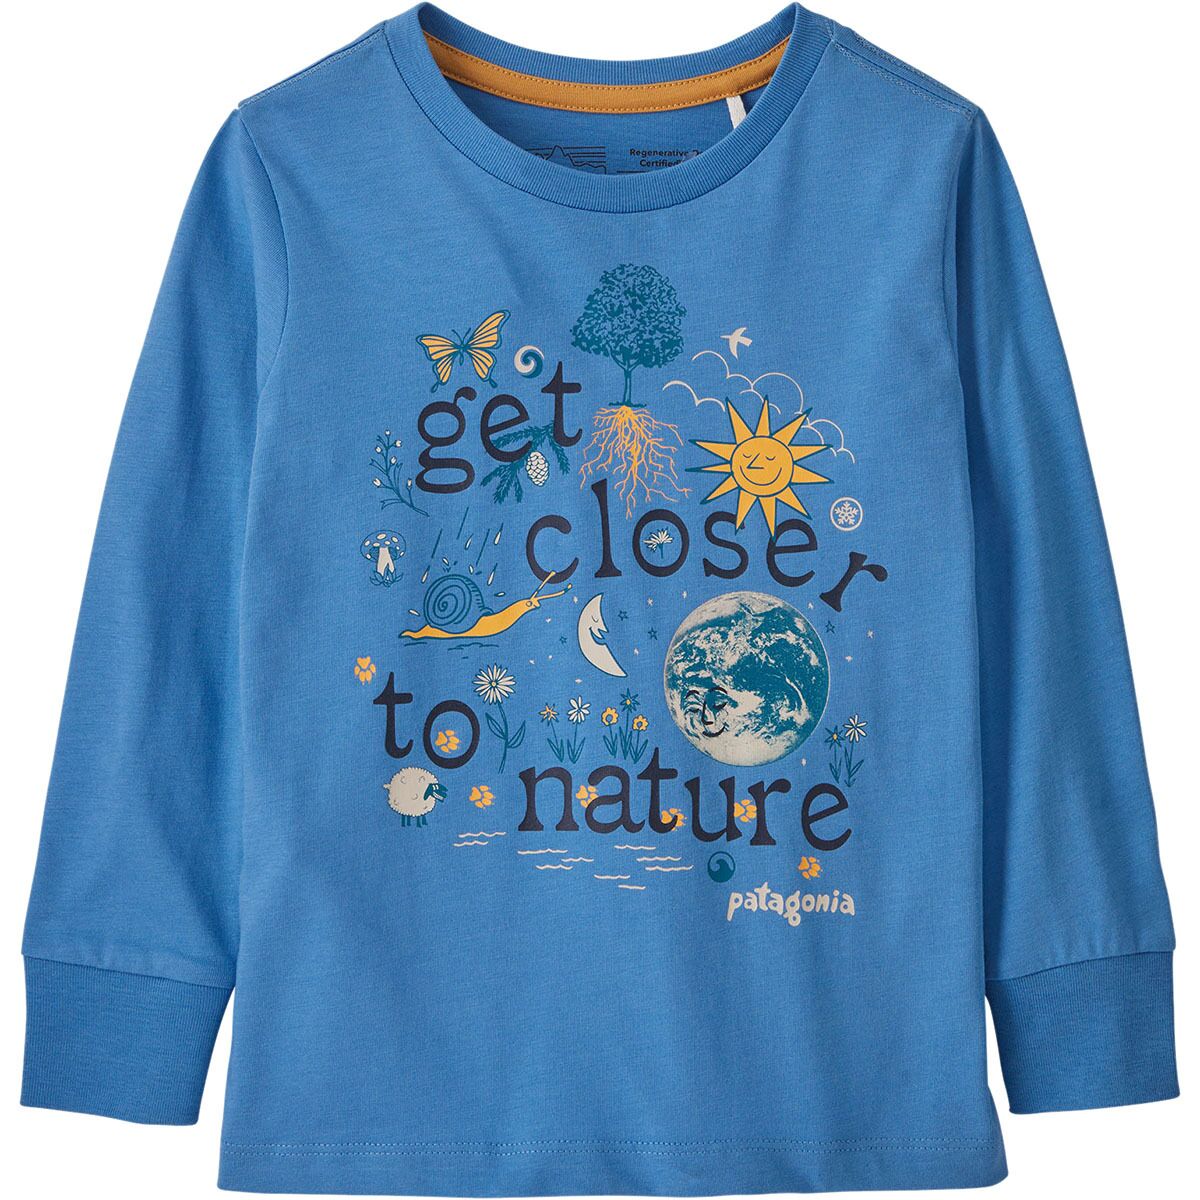 Patagonia Regenerative Organic Cotton Long-Sleeve T-Shirt - Toddlers'